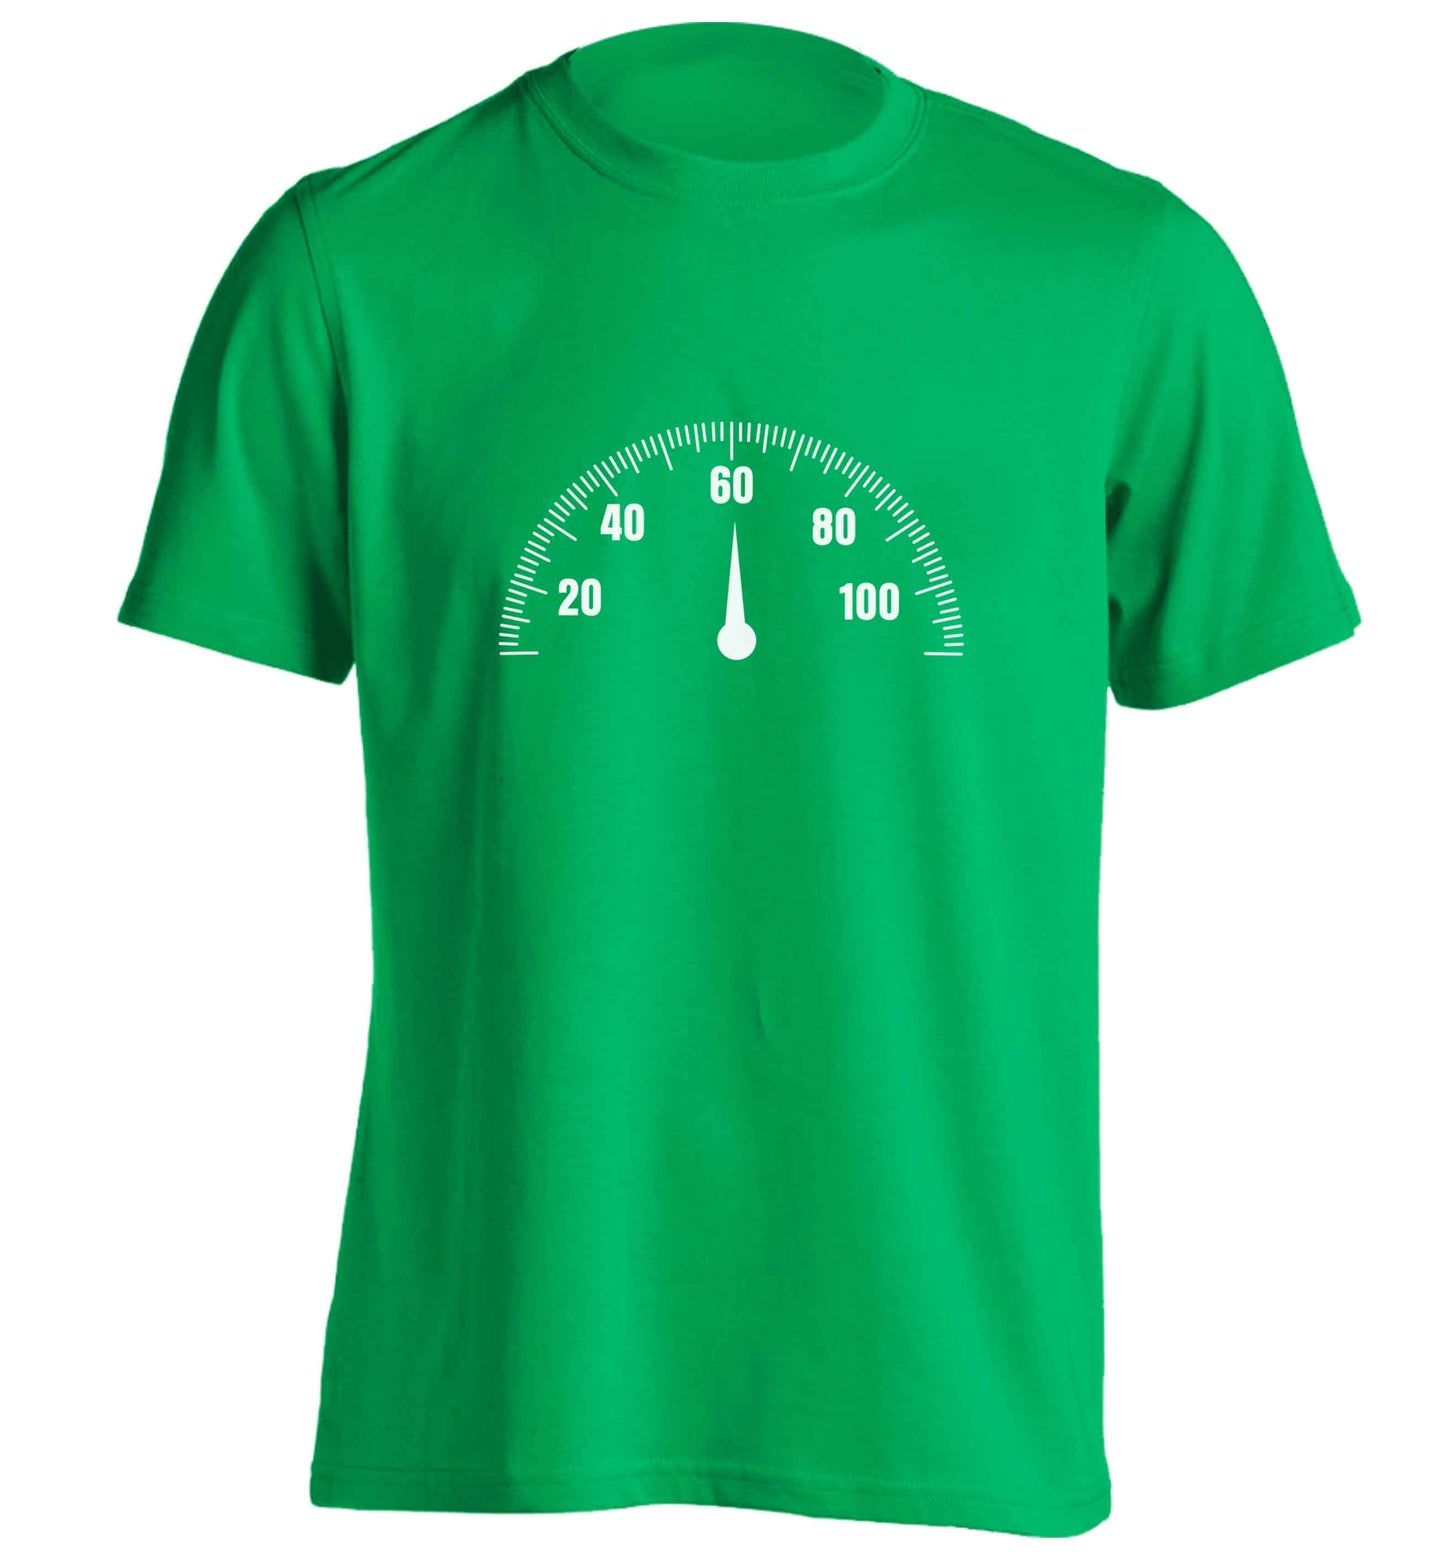 Speed dial 60 adults unisex green Tshirt 2XL